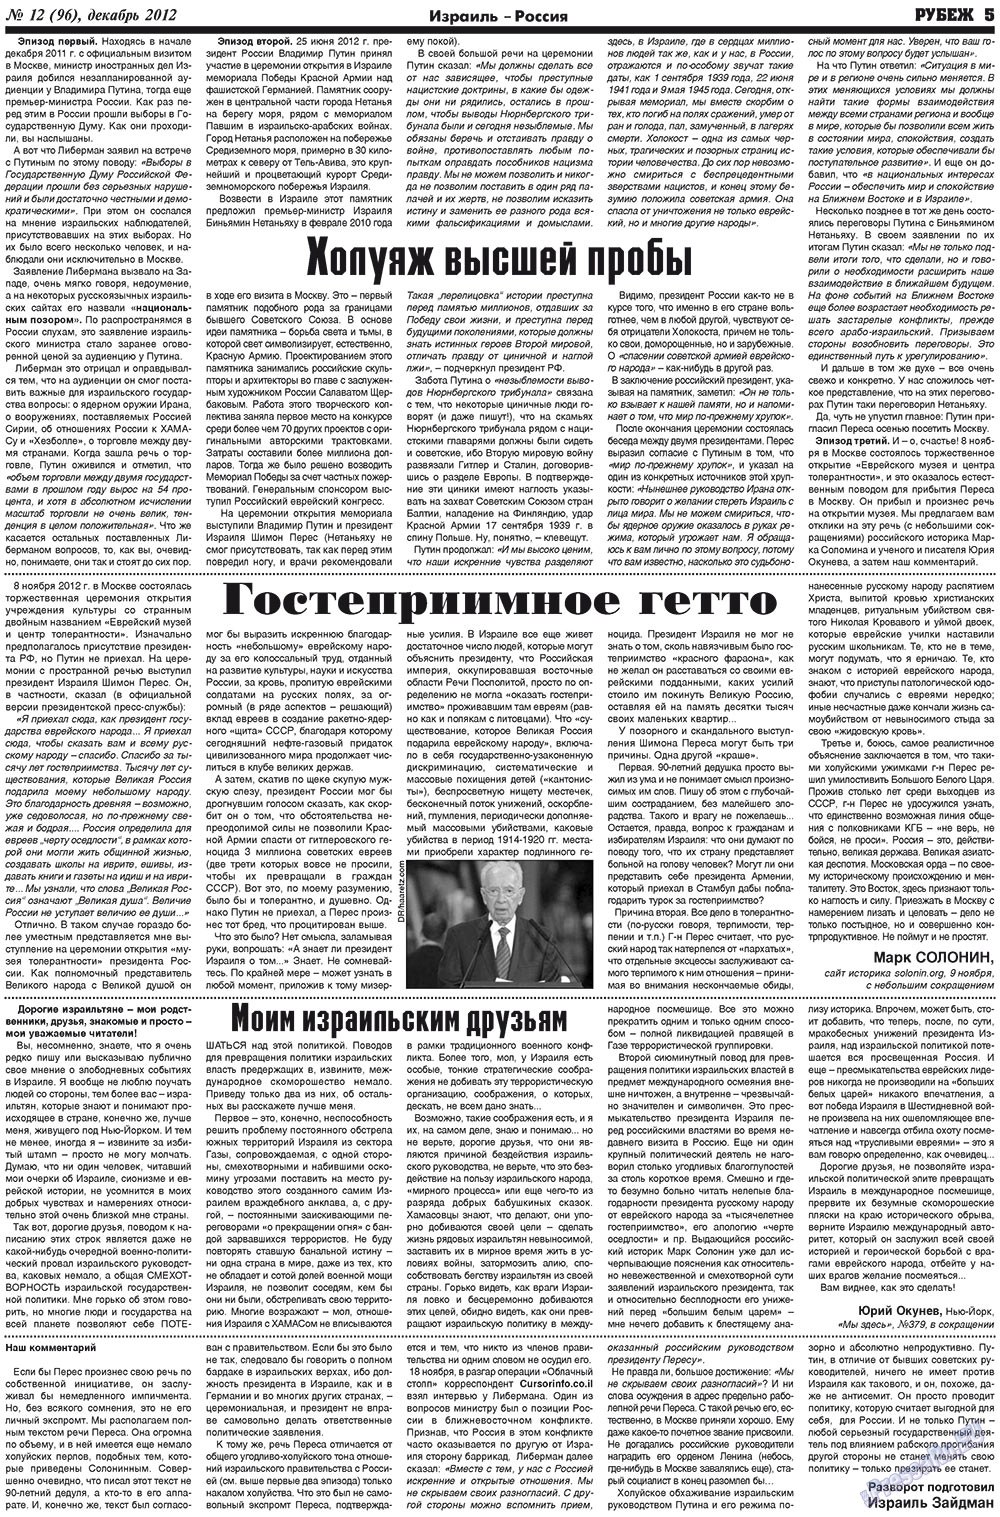 Рубеж, газета. 2012 №12 стр.5